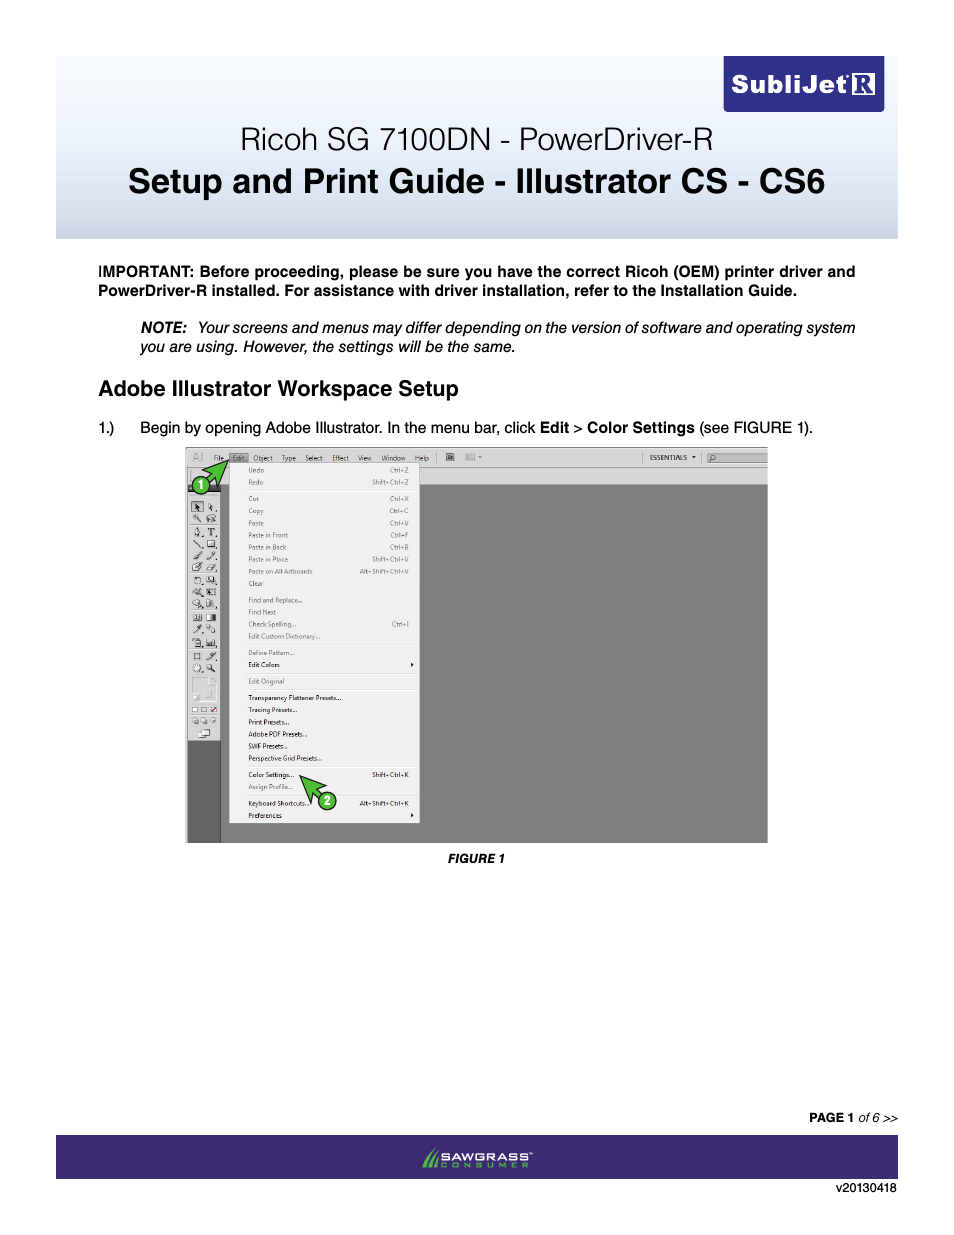 SubliJet R Ricoh SG7100DN (Windows Power Driver Setup): Print & Setup Guide Adobe Illustrator CS - CS6